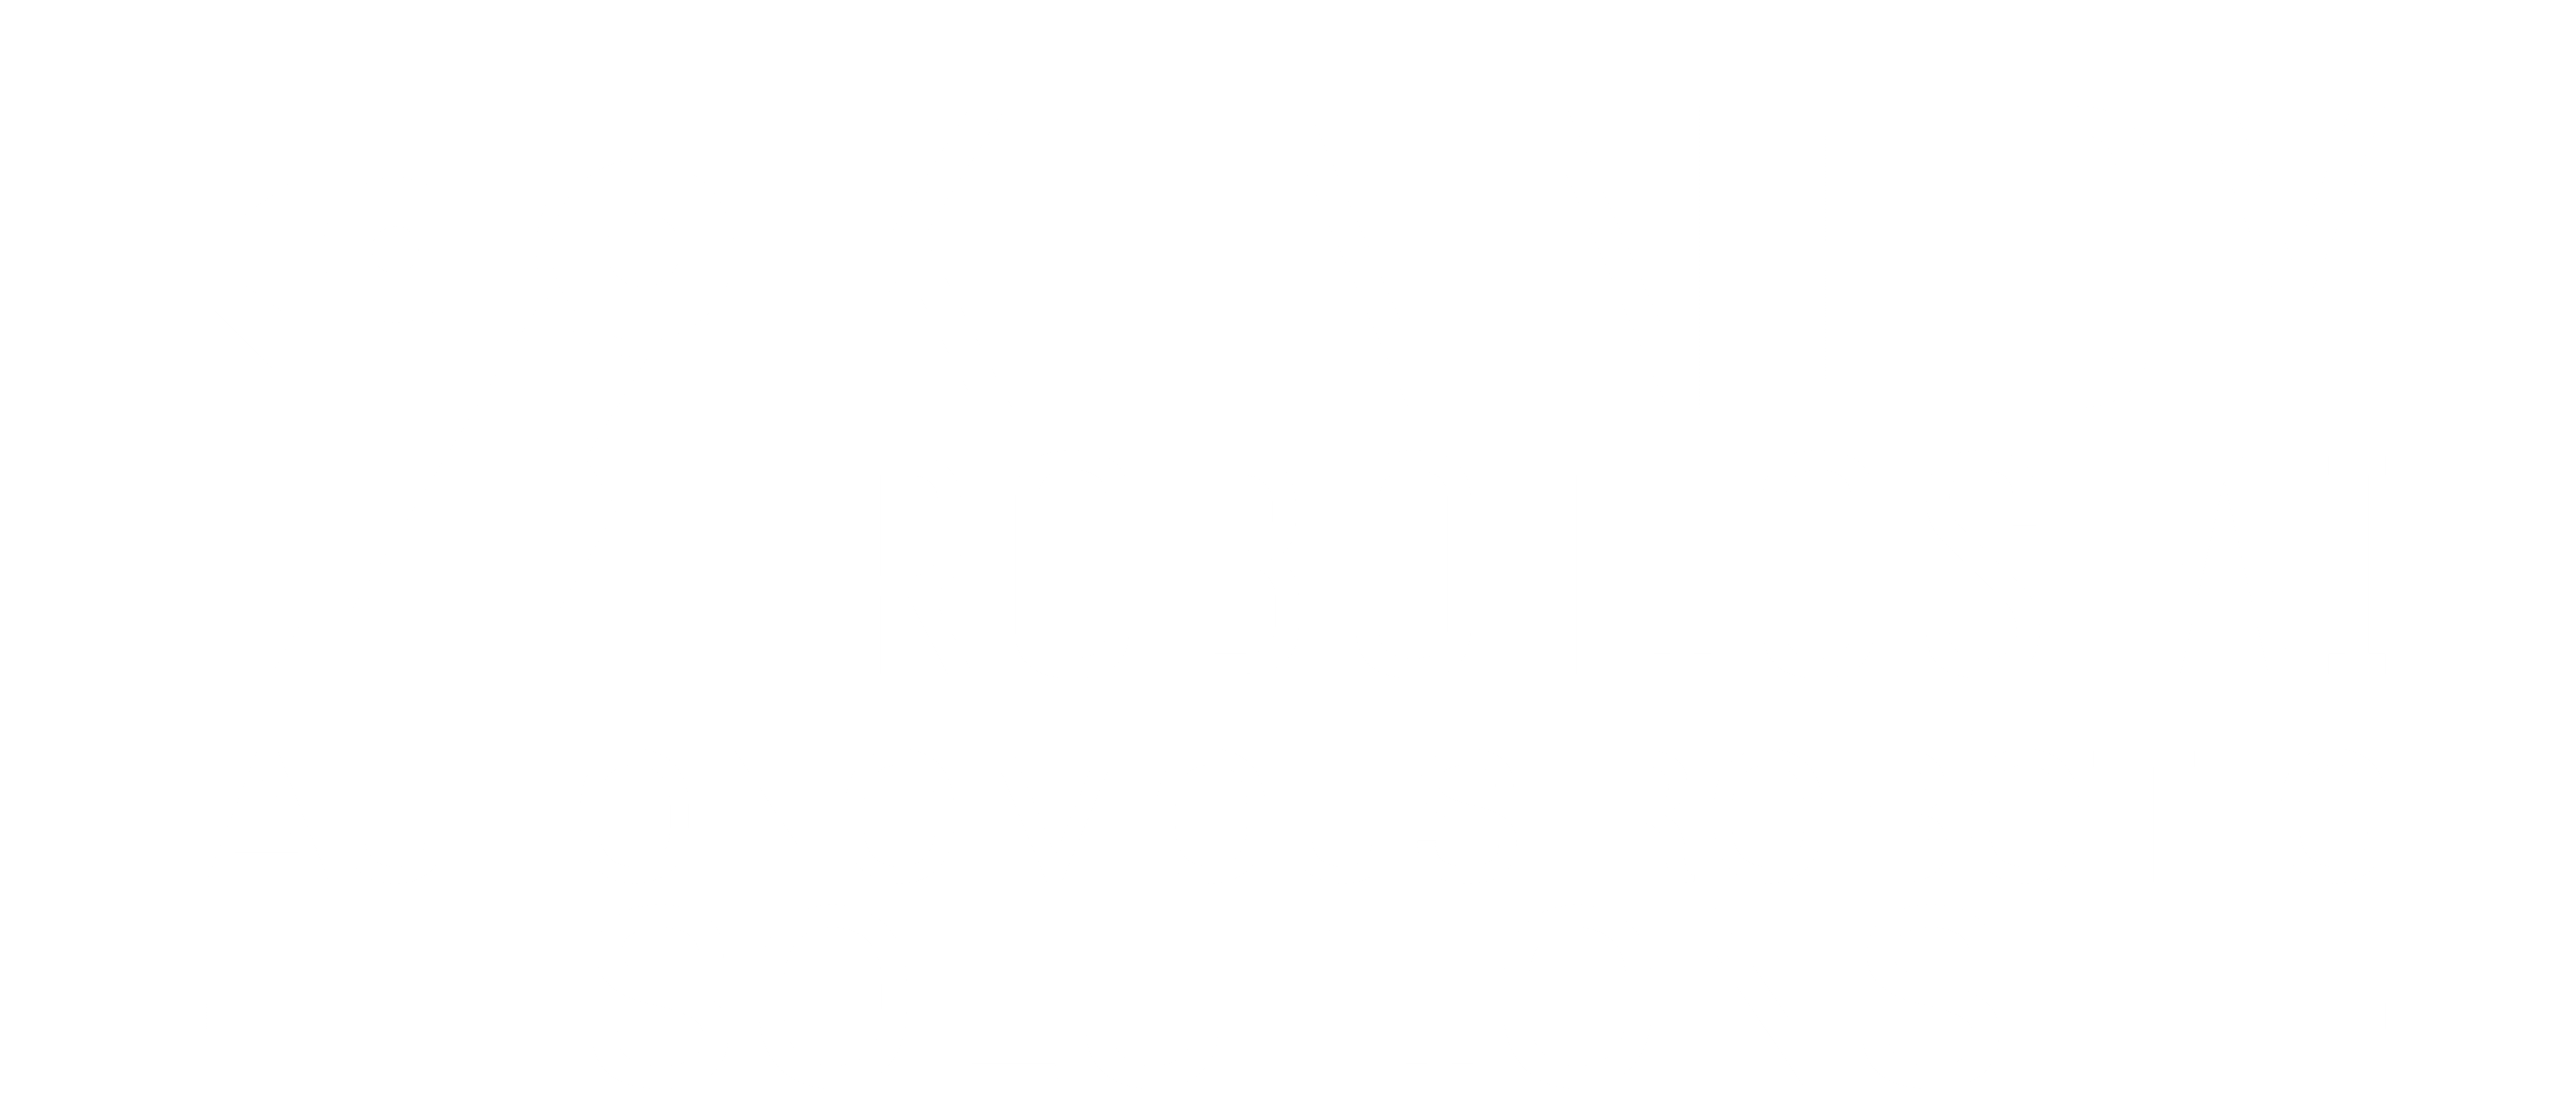 KENNEDY ROBOTICS AI
AUTONOMOUS ROBOTIC SOLUTIONS
AMR'S/ AI HUMANOID ROBOTS/ SORTING COBOTS/ASSEMBLY ROBOTS/ PACKAGING ROBOTS/ ROBOTIC SEWING/ CLEANING ROBOTS